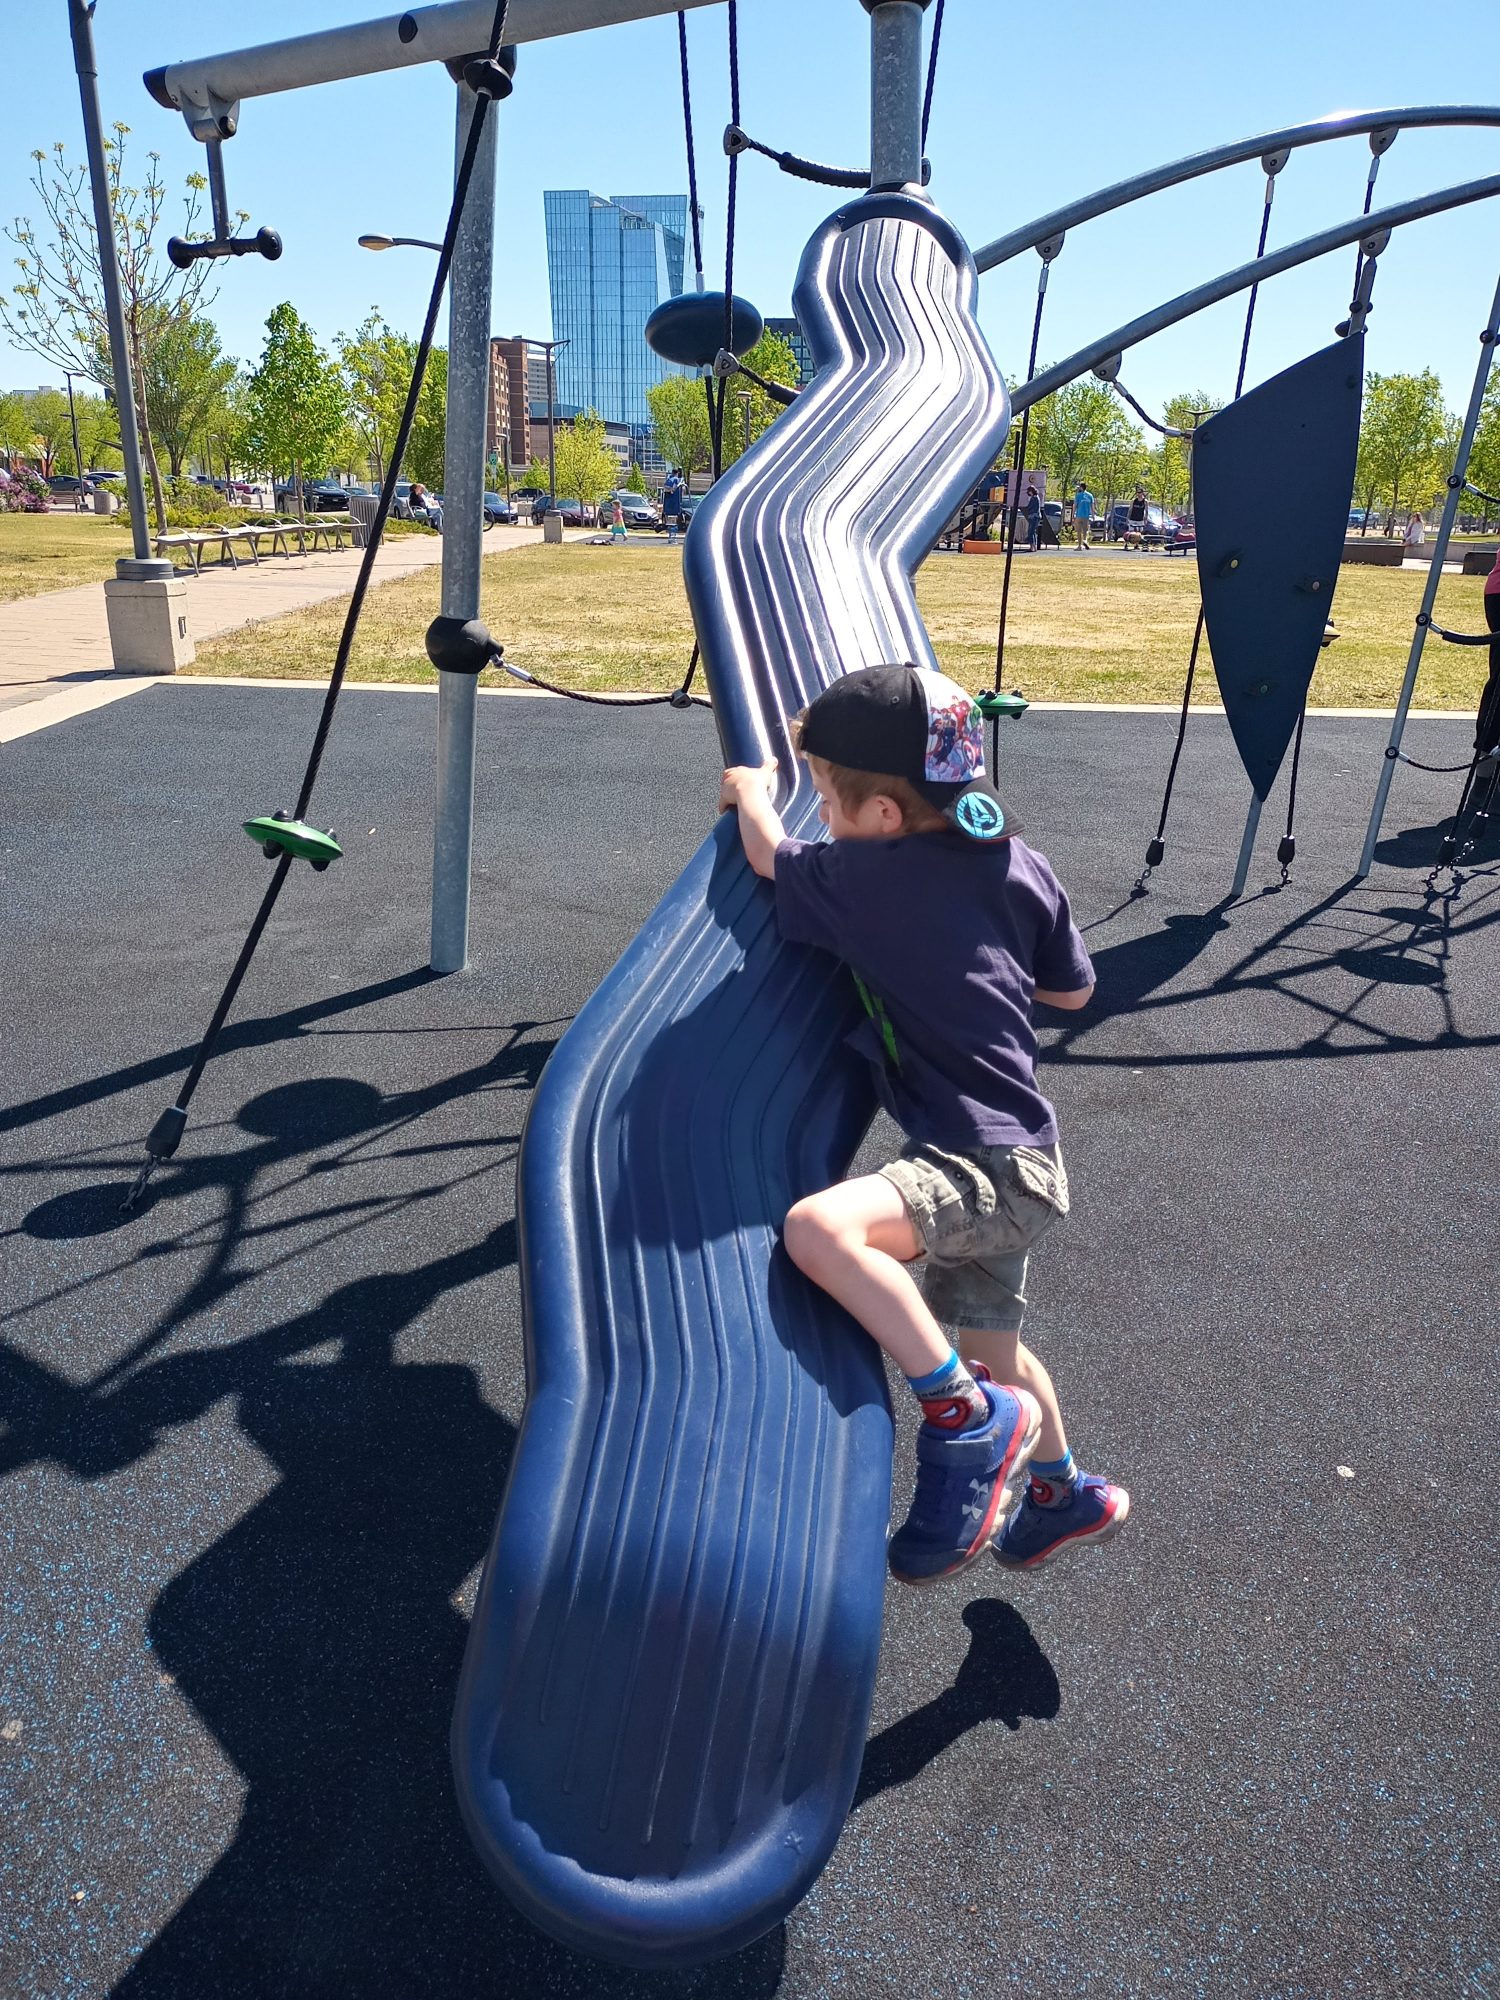 saskatoon playgrounds